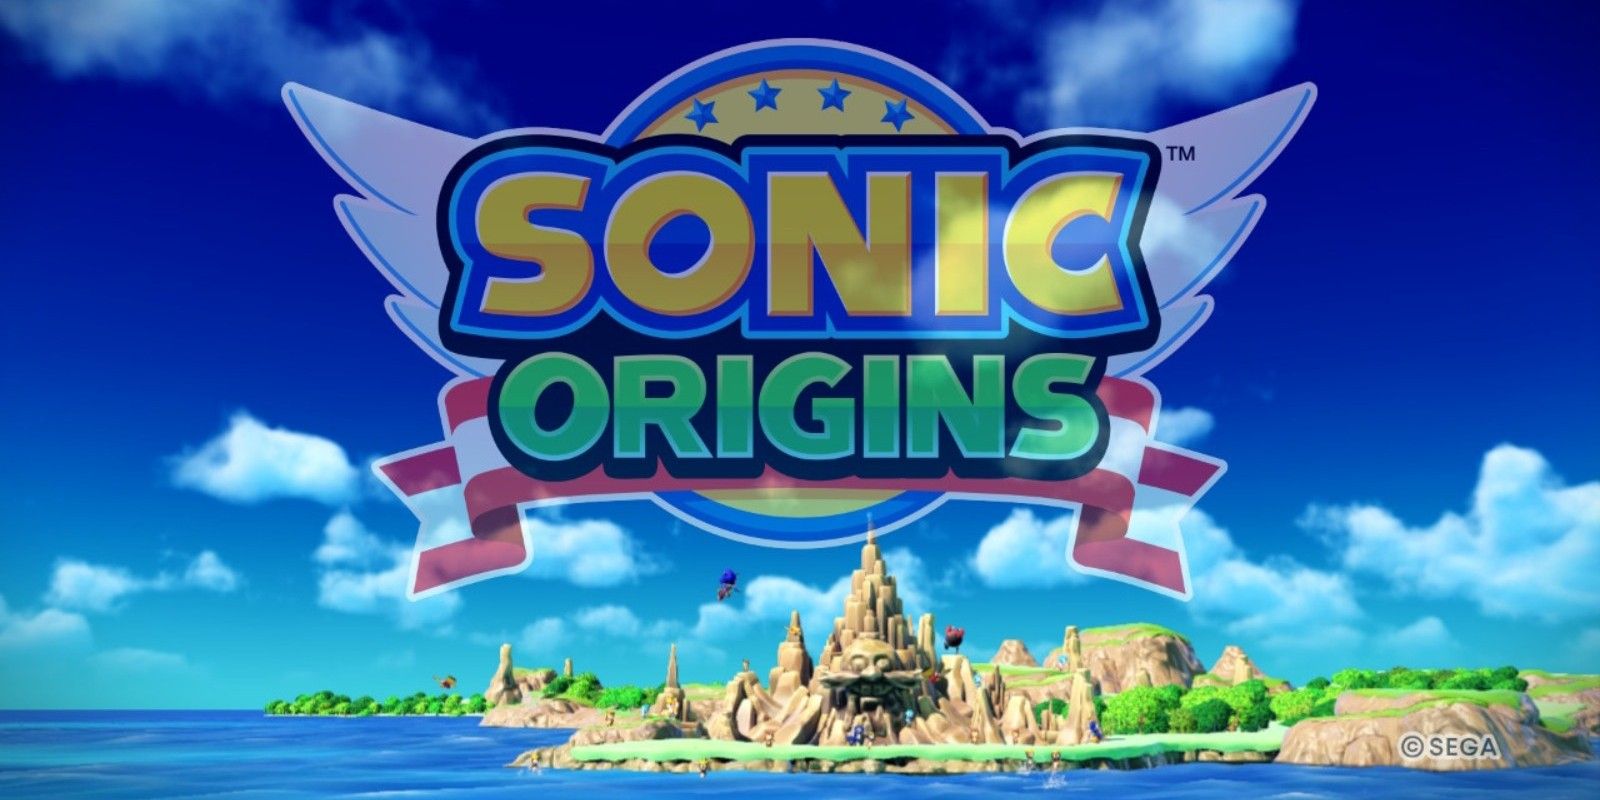 Sonic Origins title screen fade